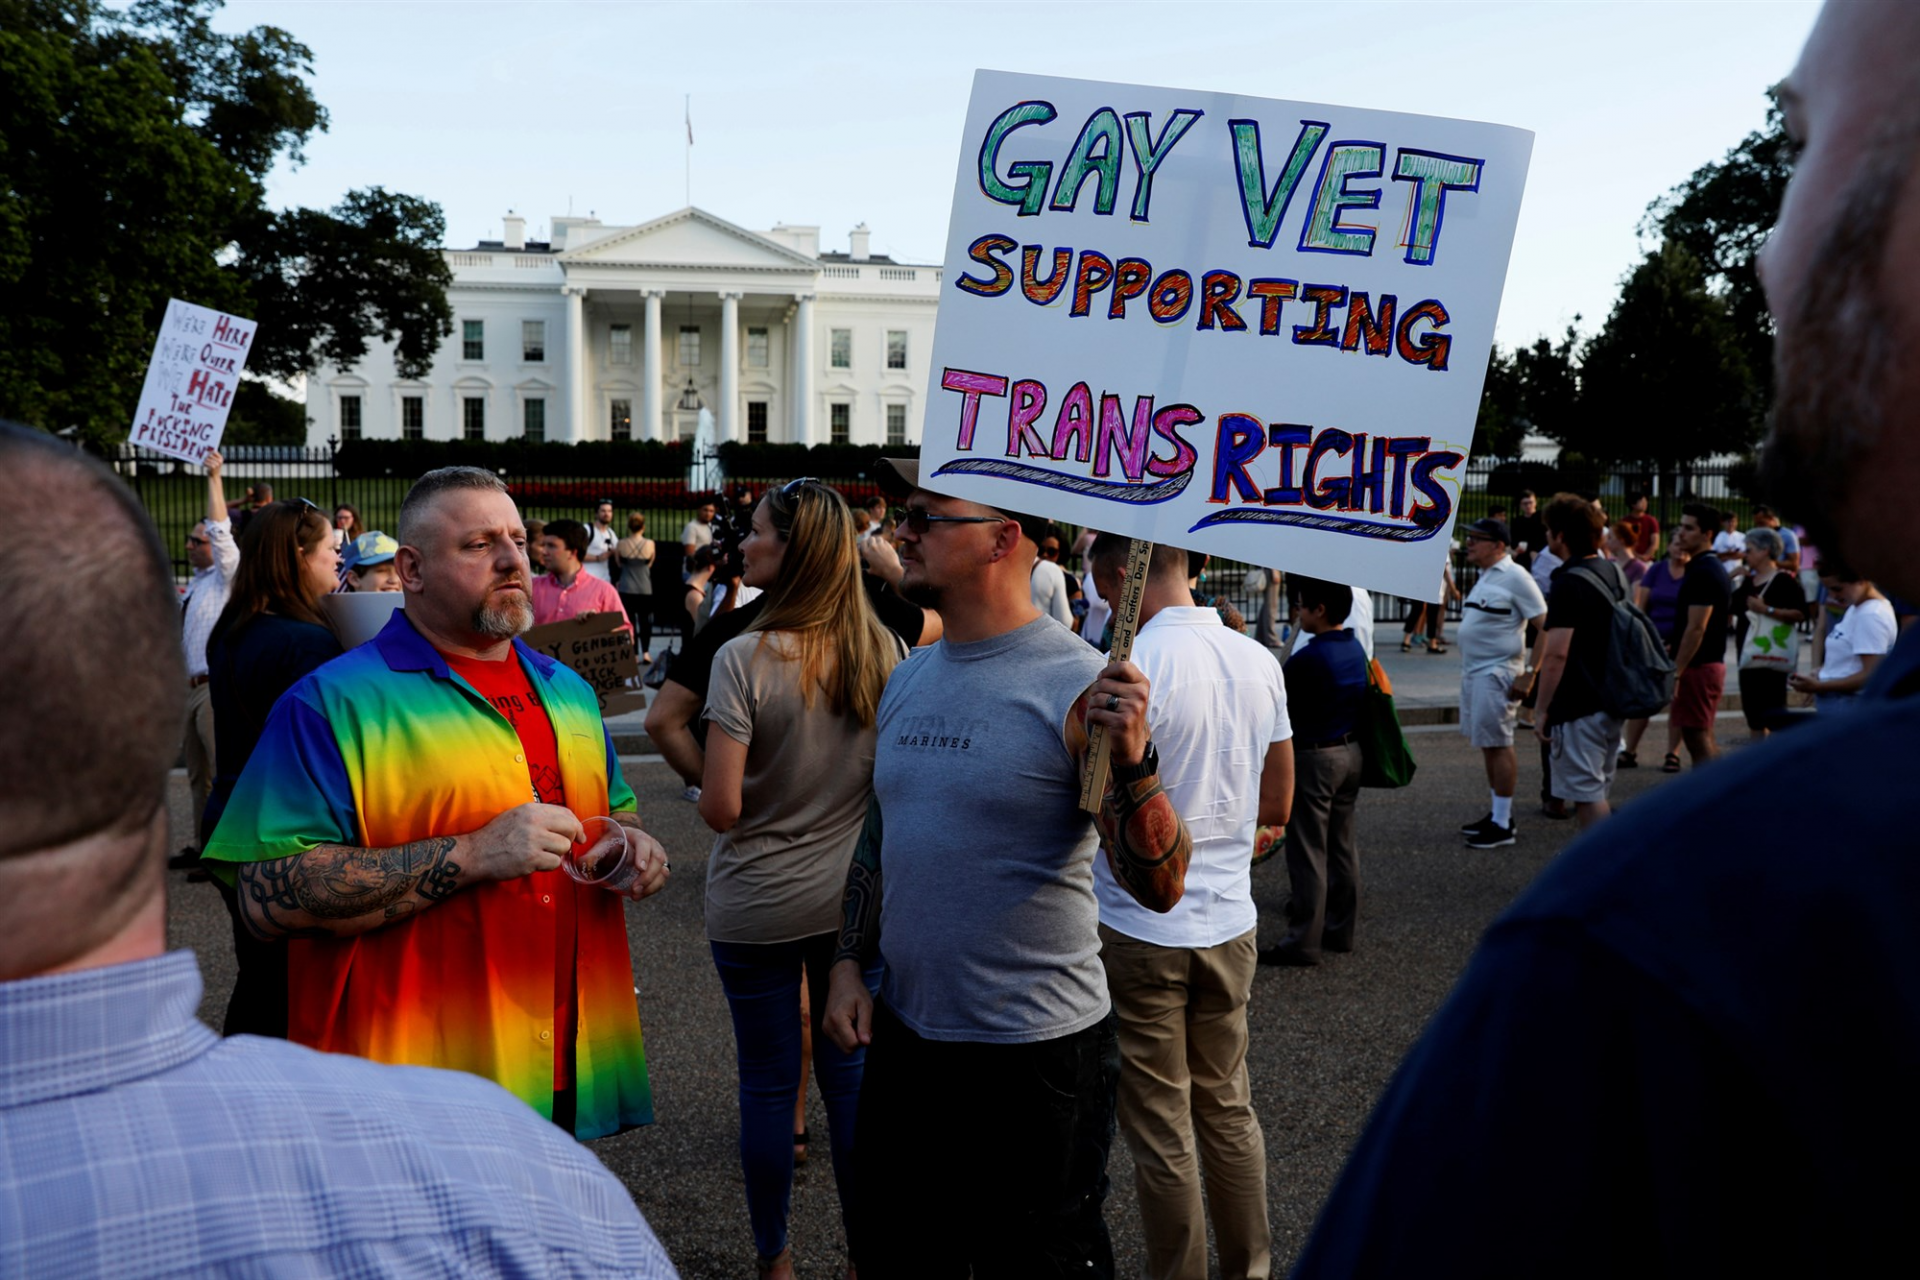 President Joe Biden reverses Trump's transgender military ban, given rights to LGBT community